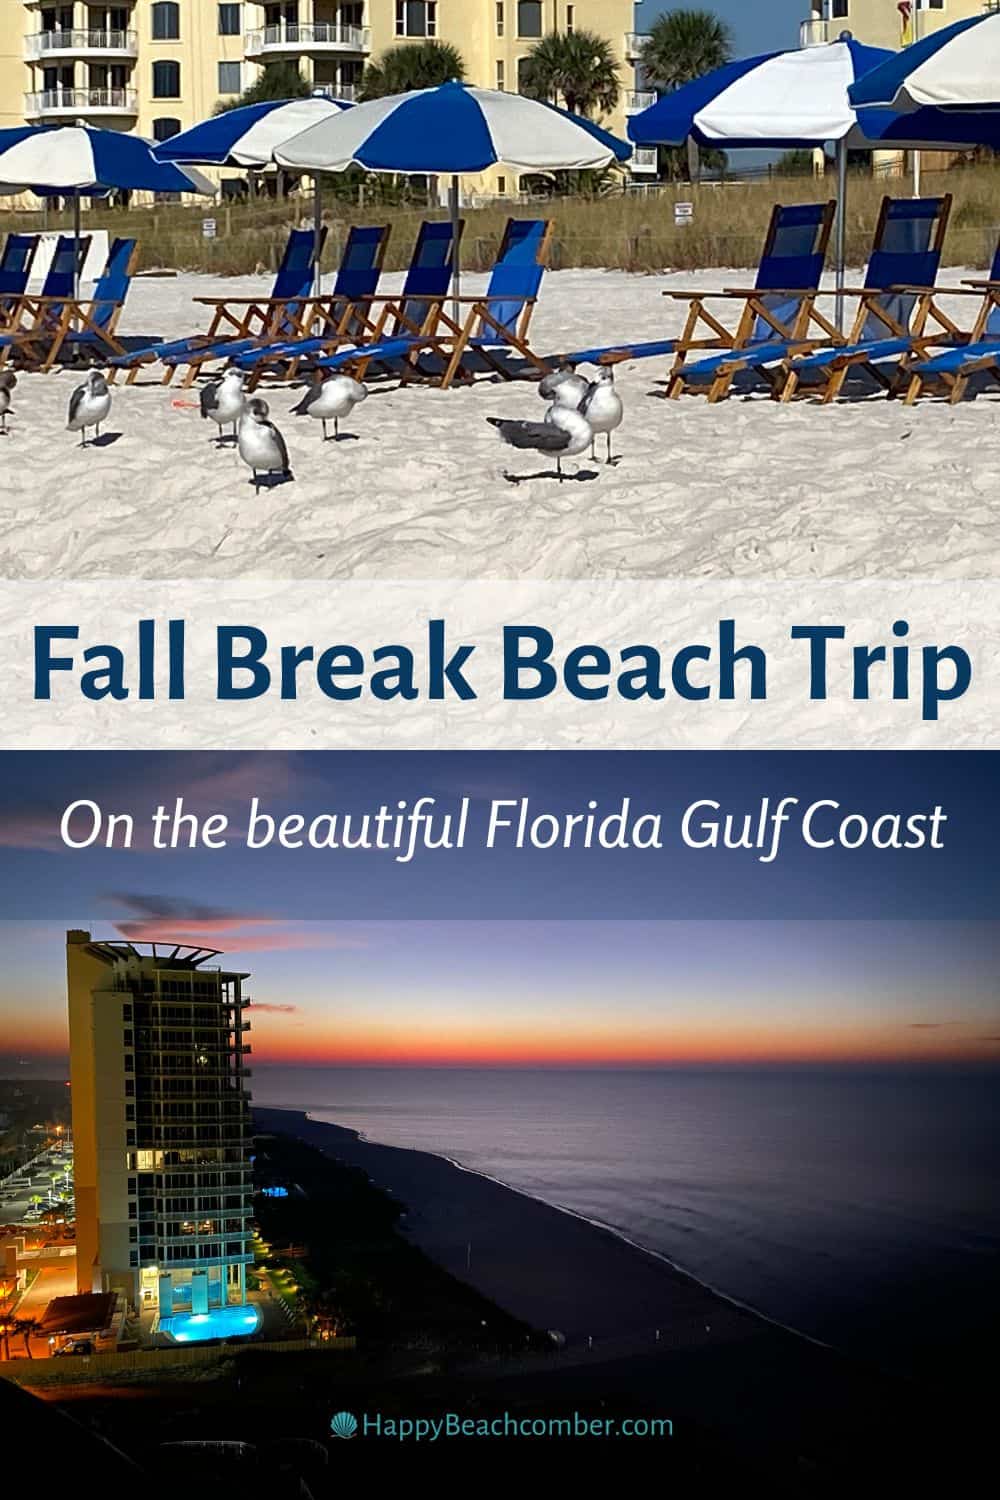 Fall Break Beach Trip